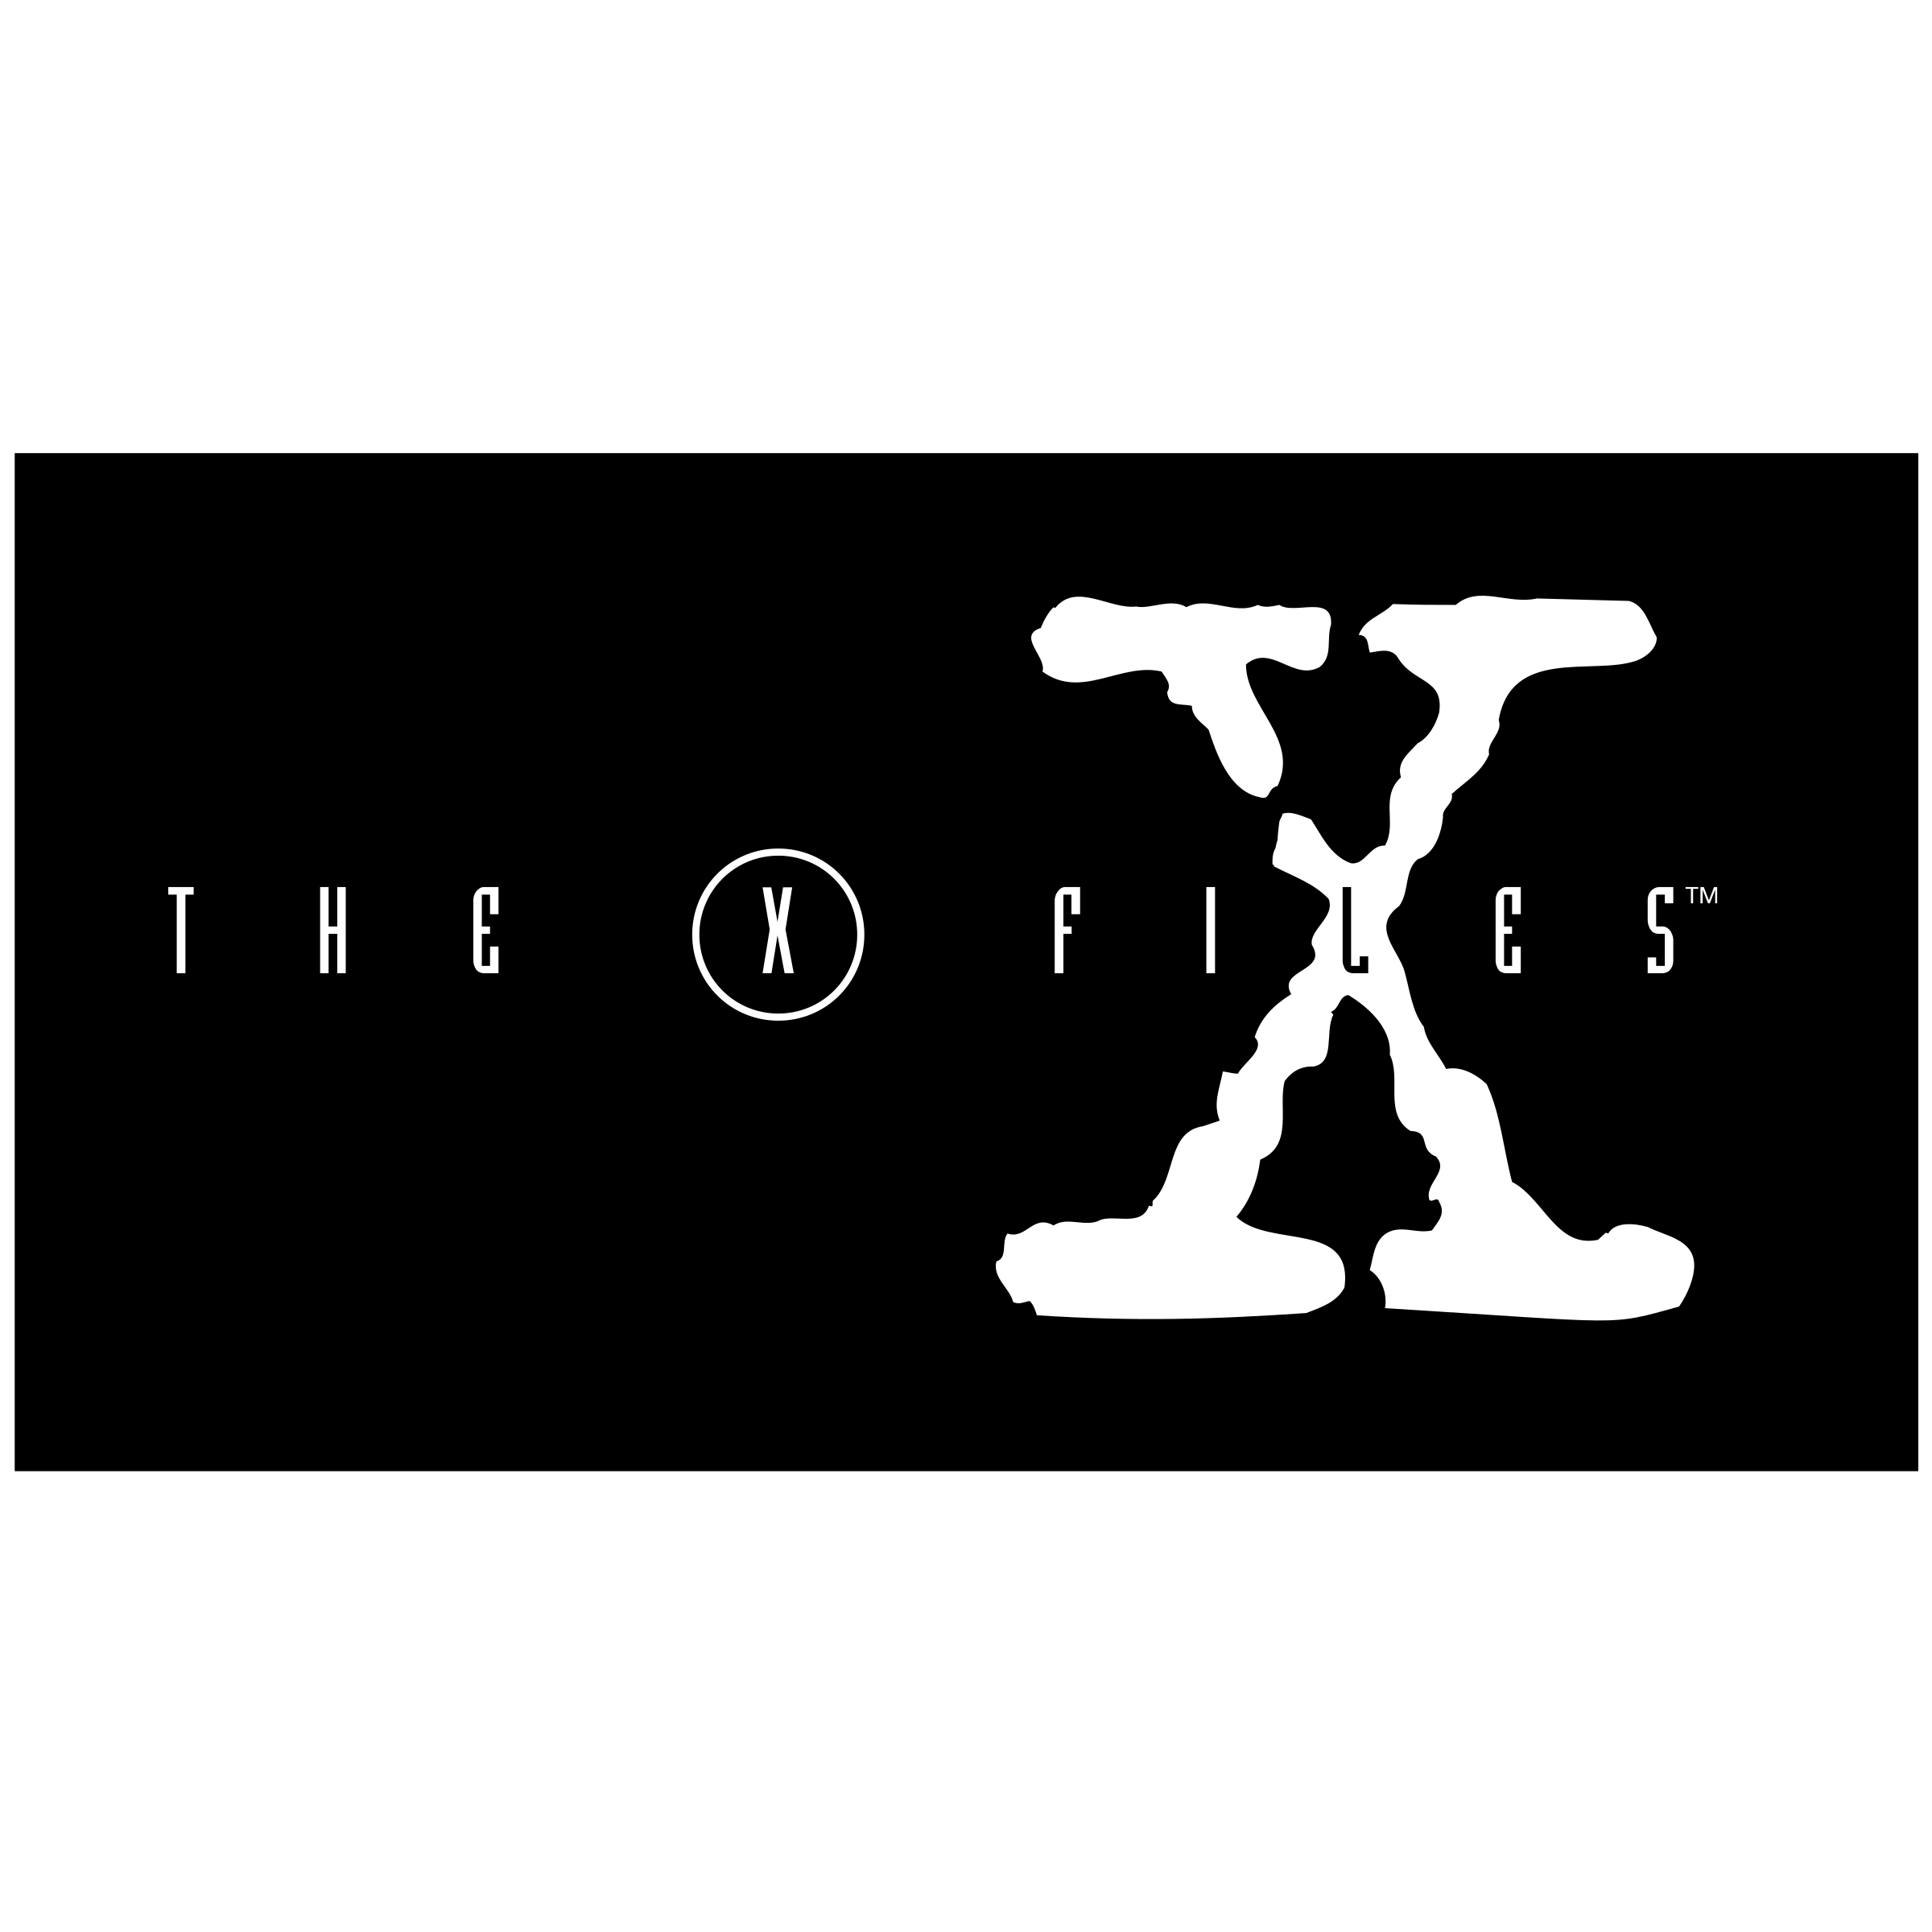 X-Files Logo - X Files Logo PNG Transparent & SVG Vector - Freebie Supply